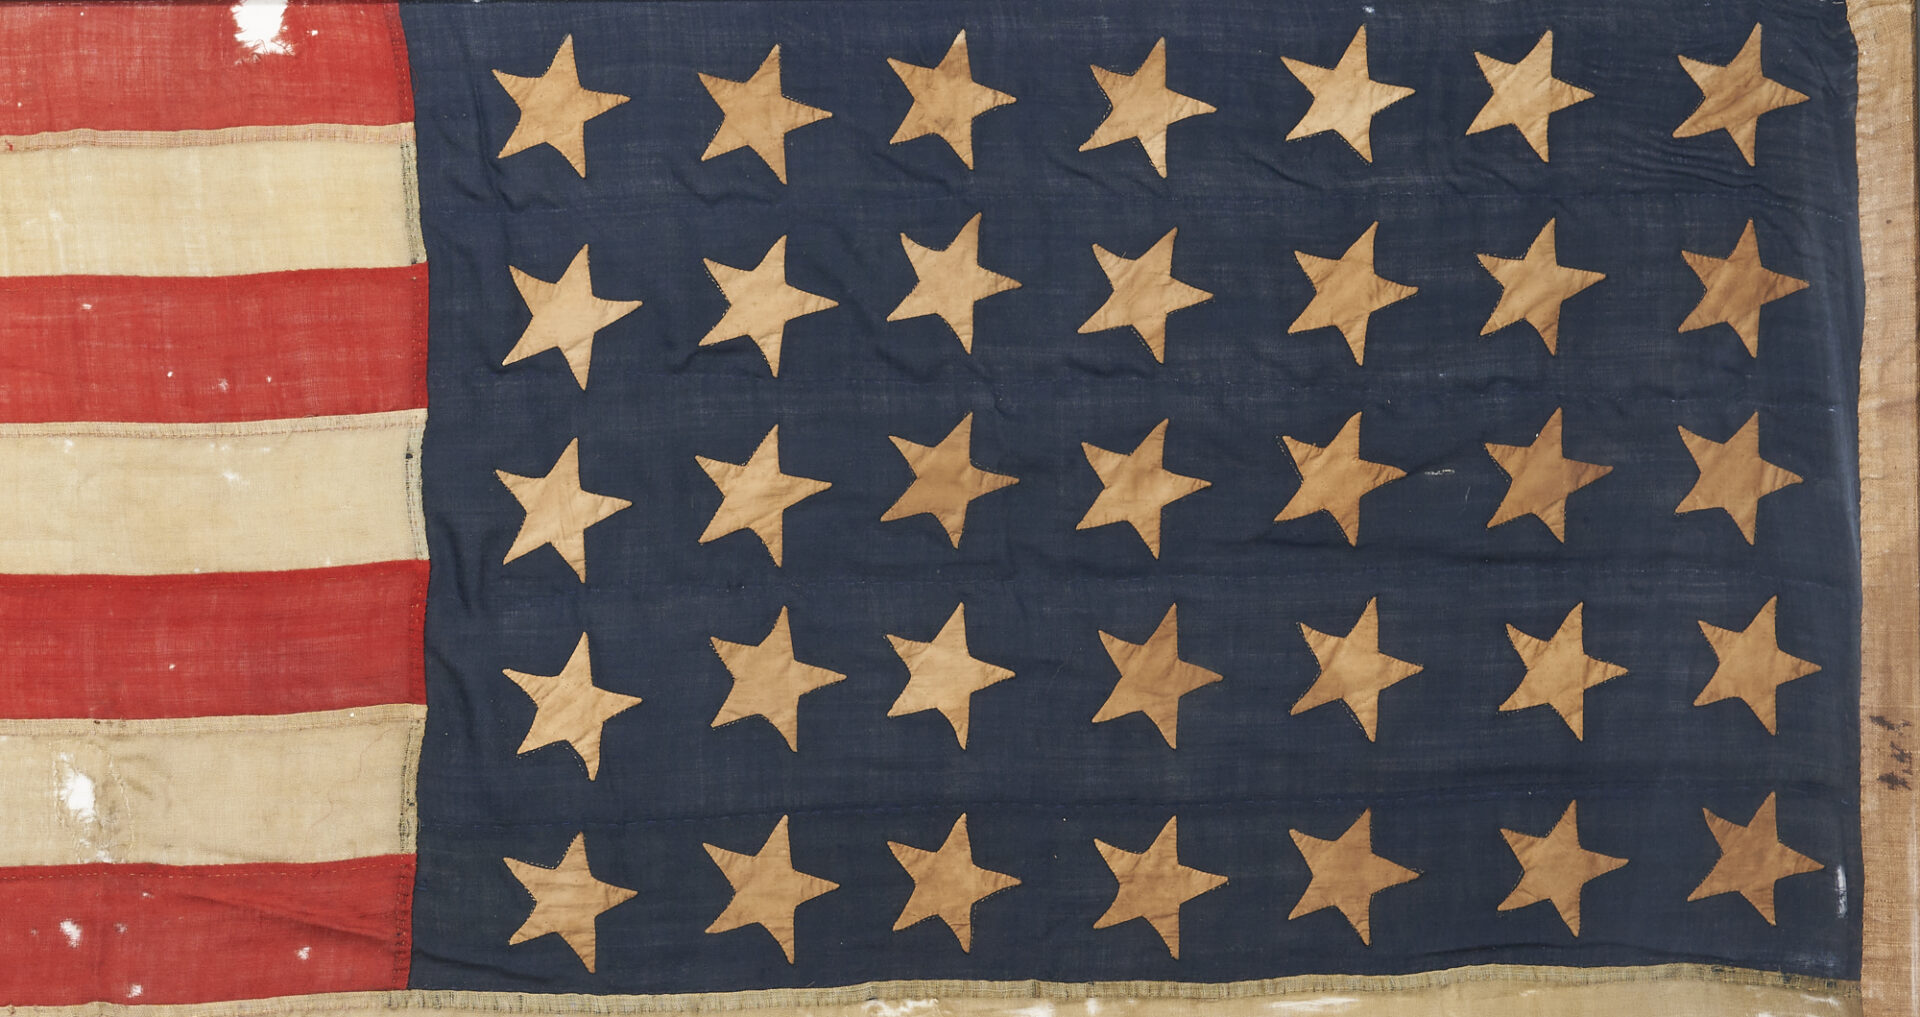 Lot 562: Admiral John Winslow USS Kearsarge Civil War 35 Star Flag Plus Commendation and Photo